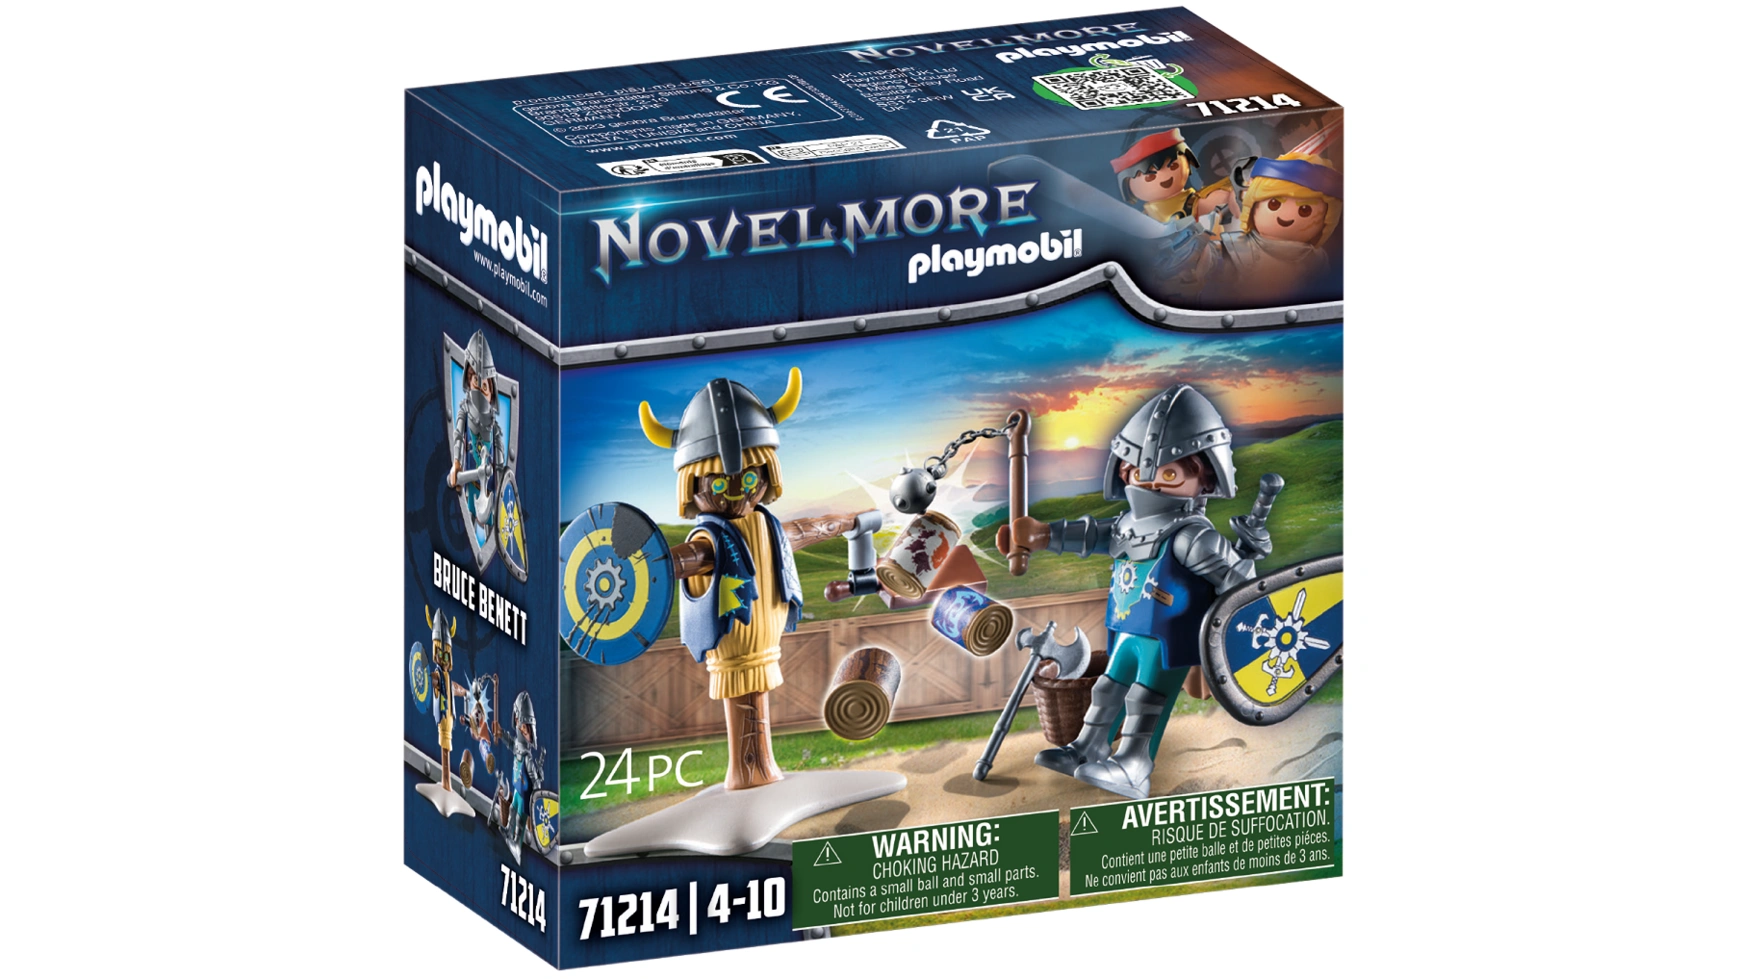 Novelmore боевая подготовка Playmobil novelmore мои фигурки рыцари новелмора playmobil